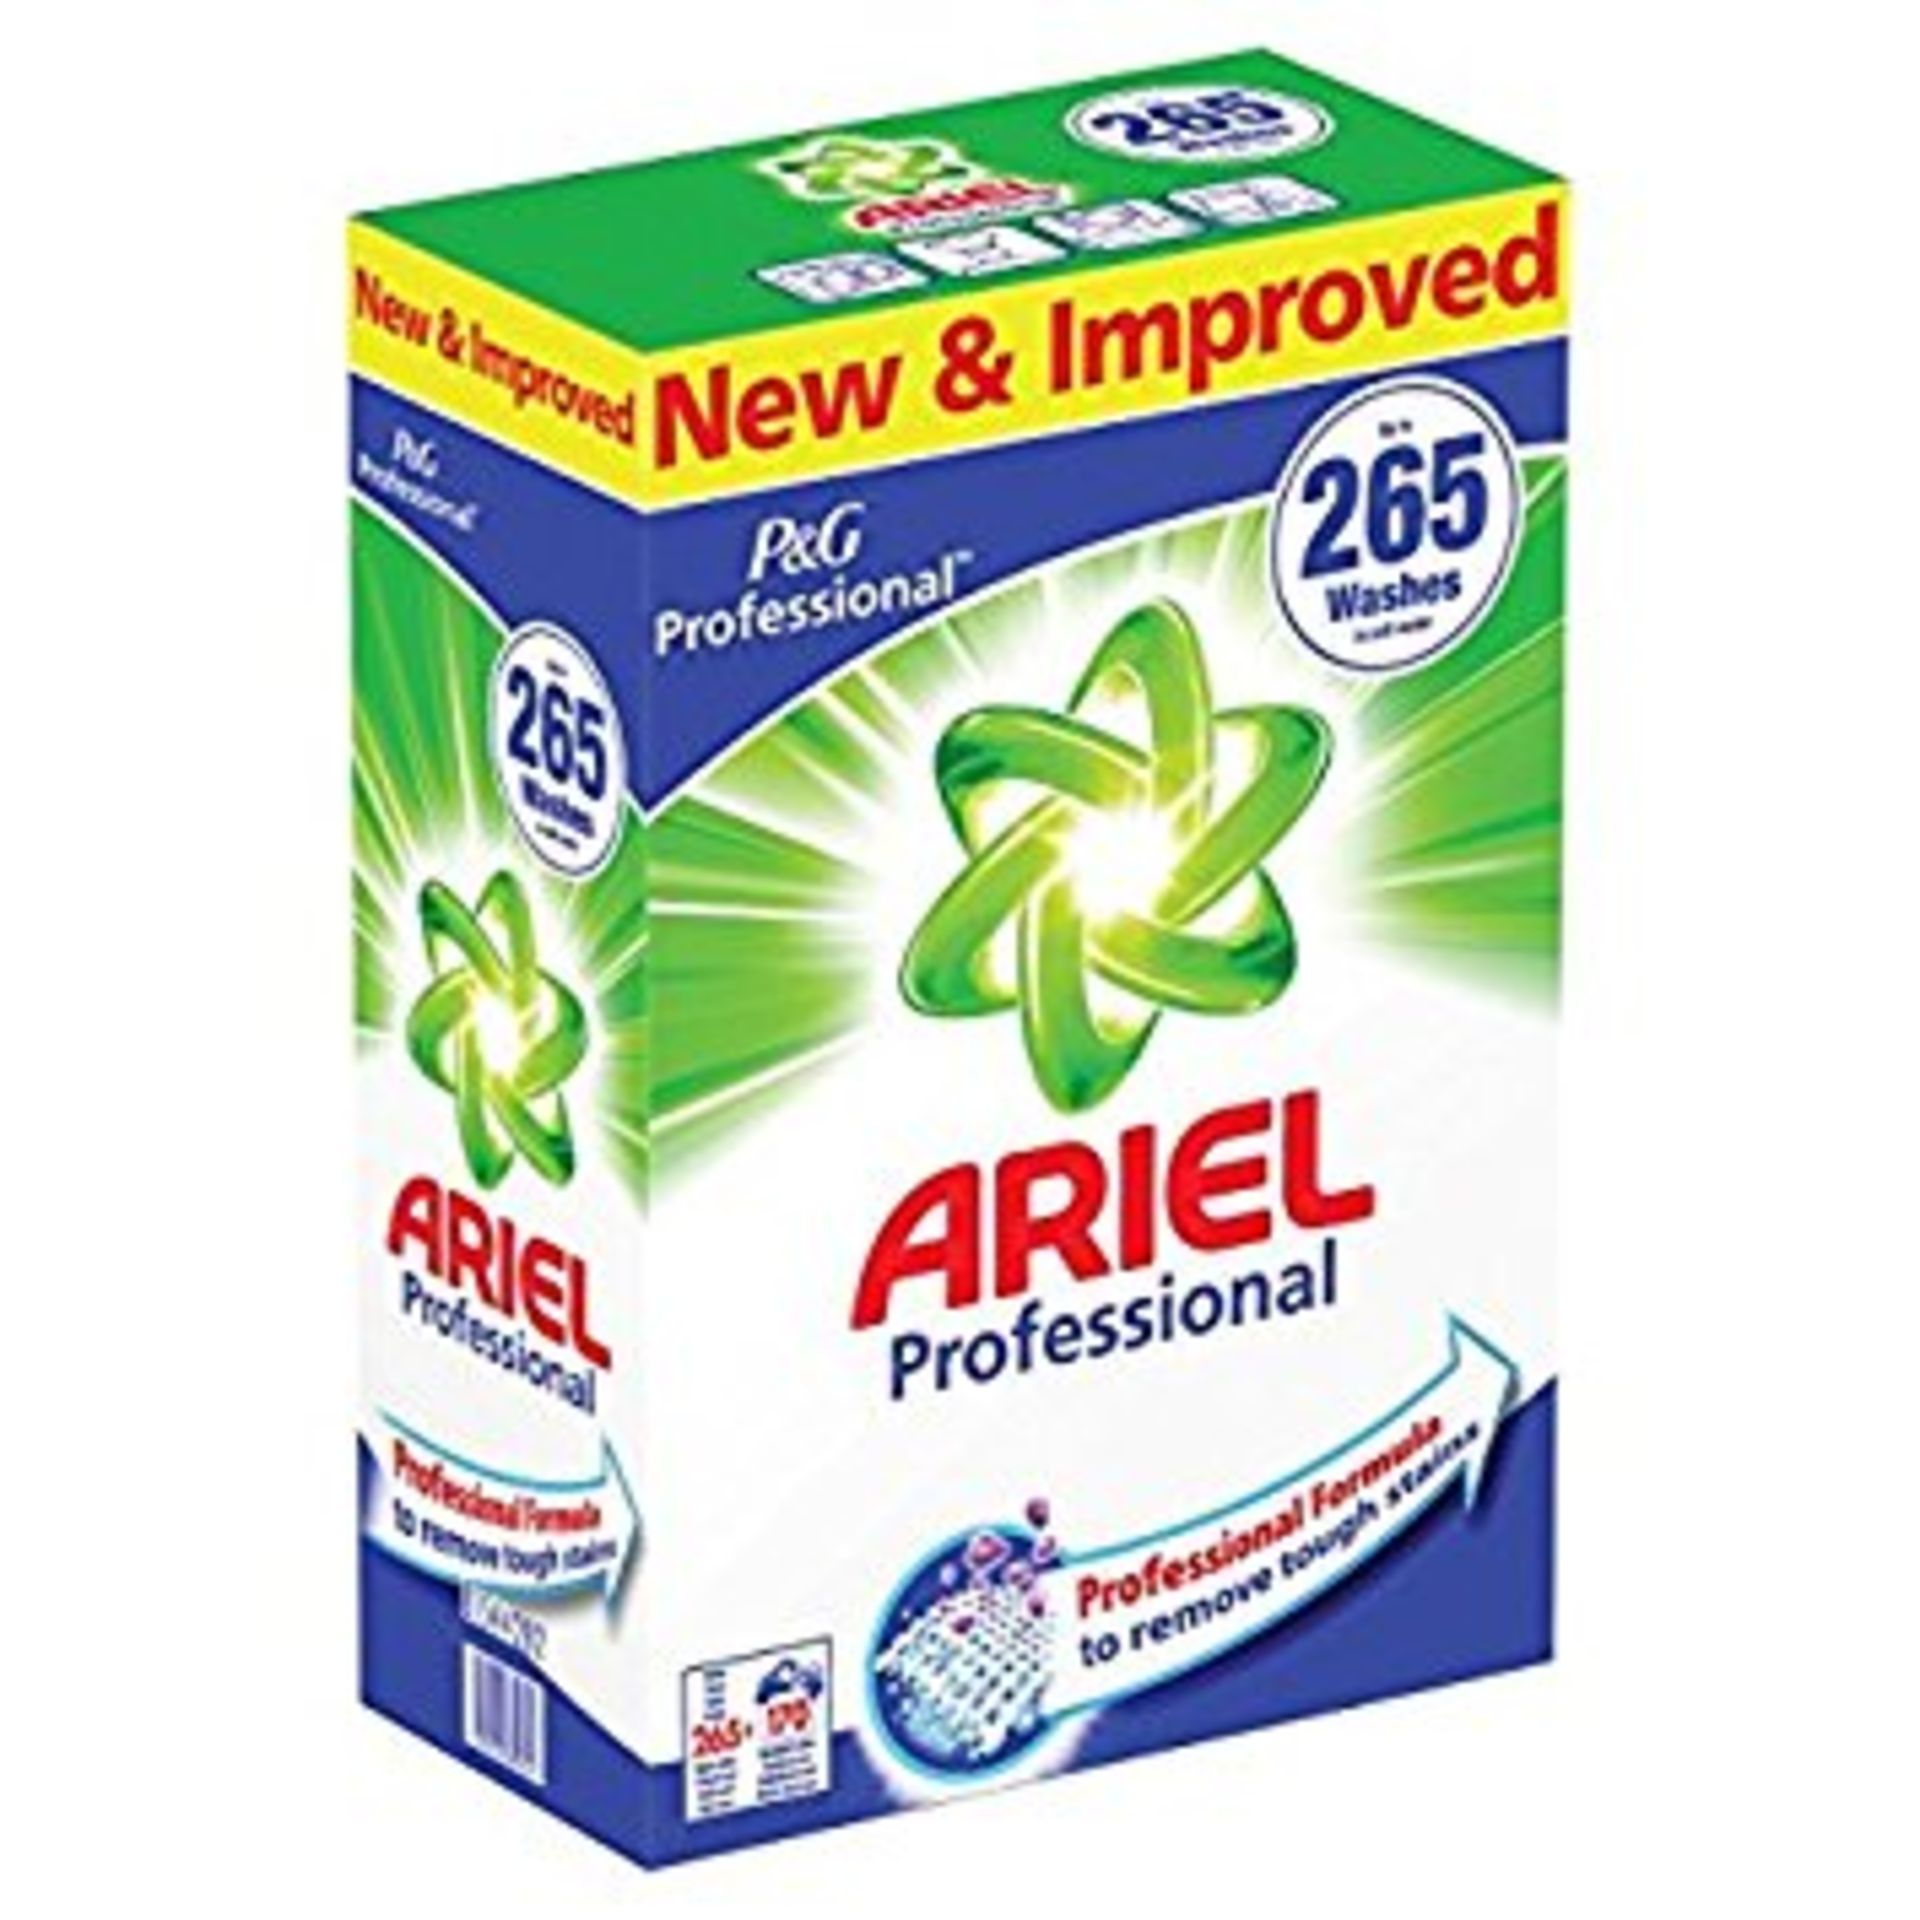 V Brand New Ariel Professional XXL 265 Washes Washing Powder X 2 YOUR BID PRICE TO BE MULTIPLIED